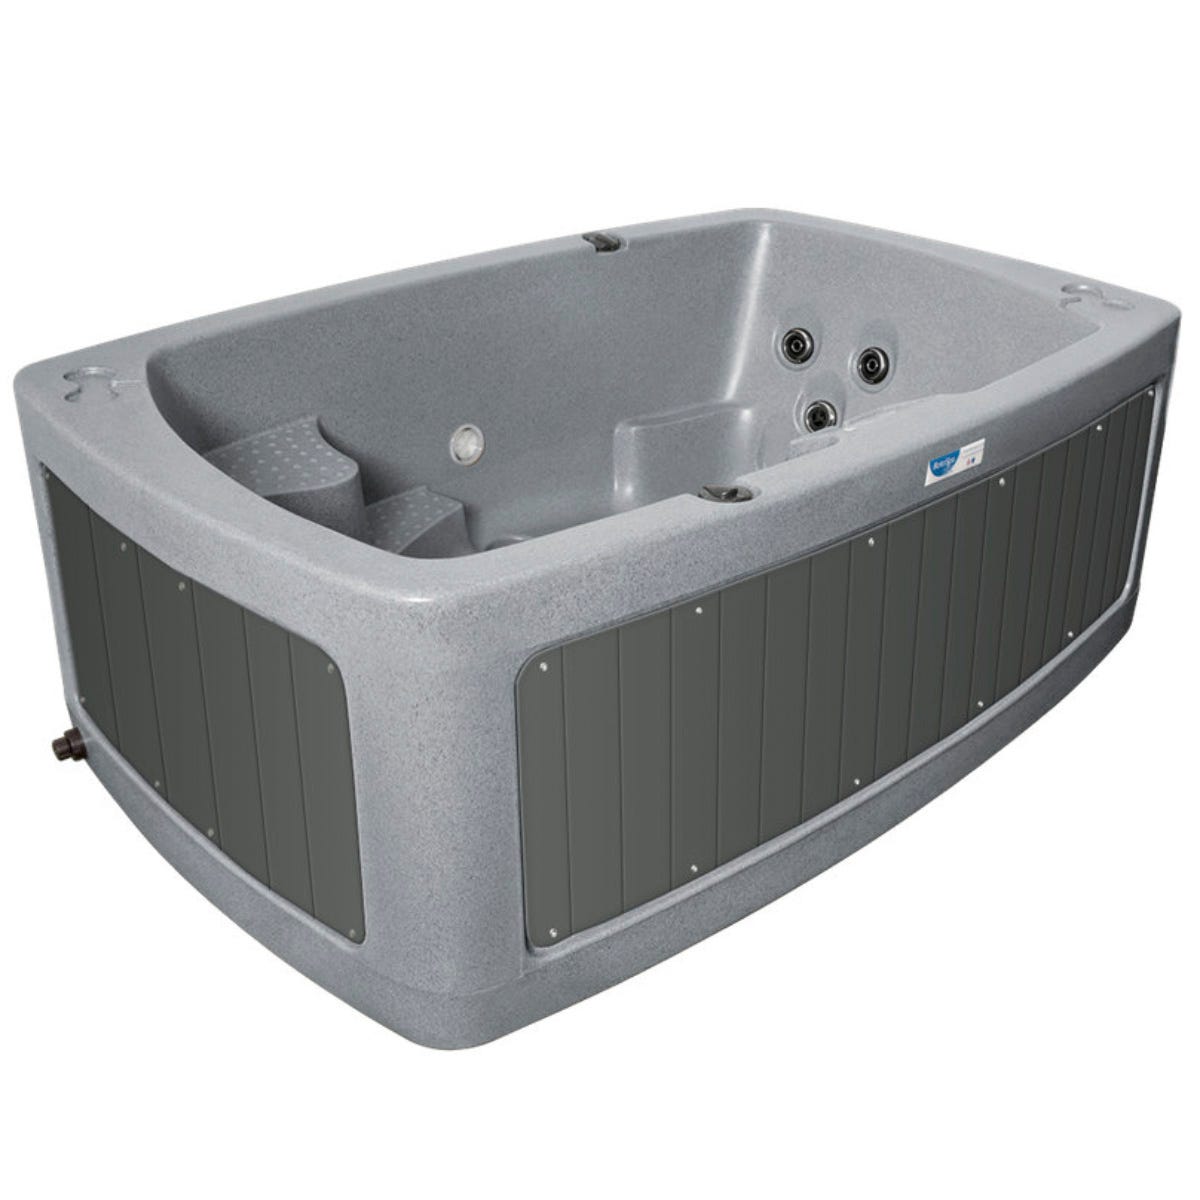 RotoSpa DuoSpa S080 Compact Hot Tub - Light Grey